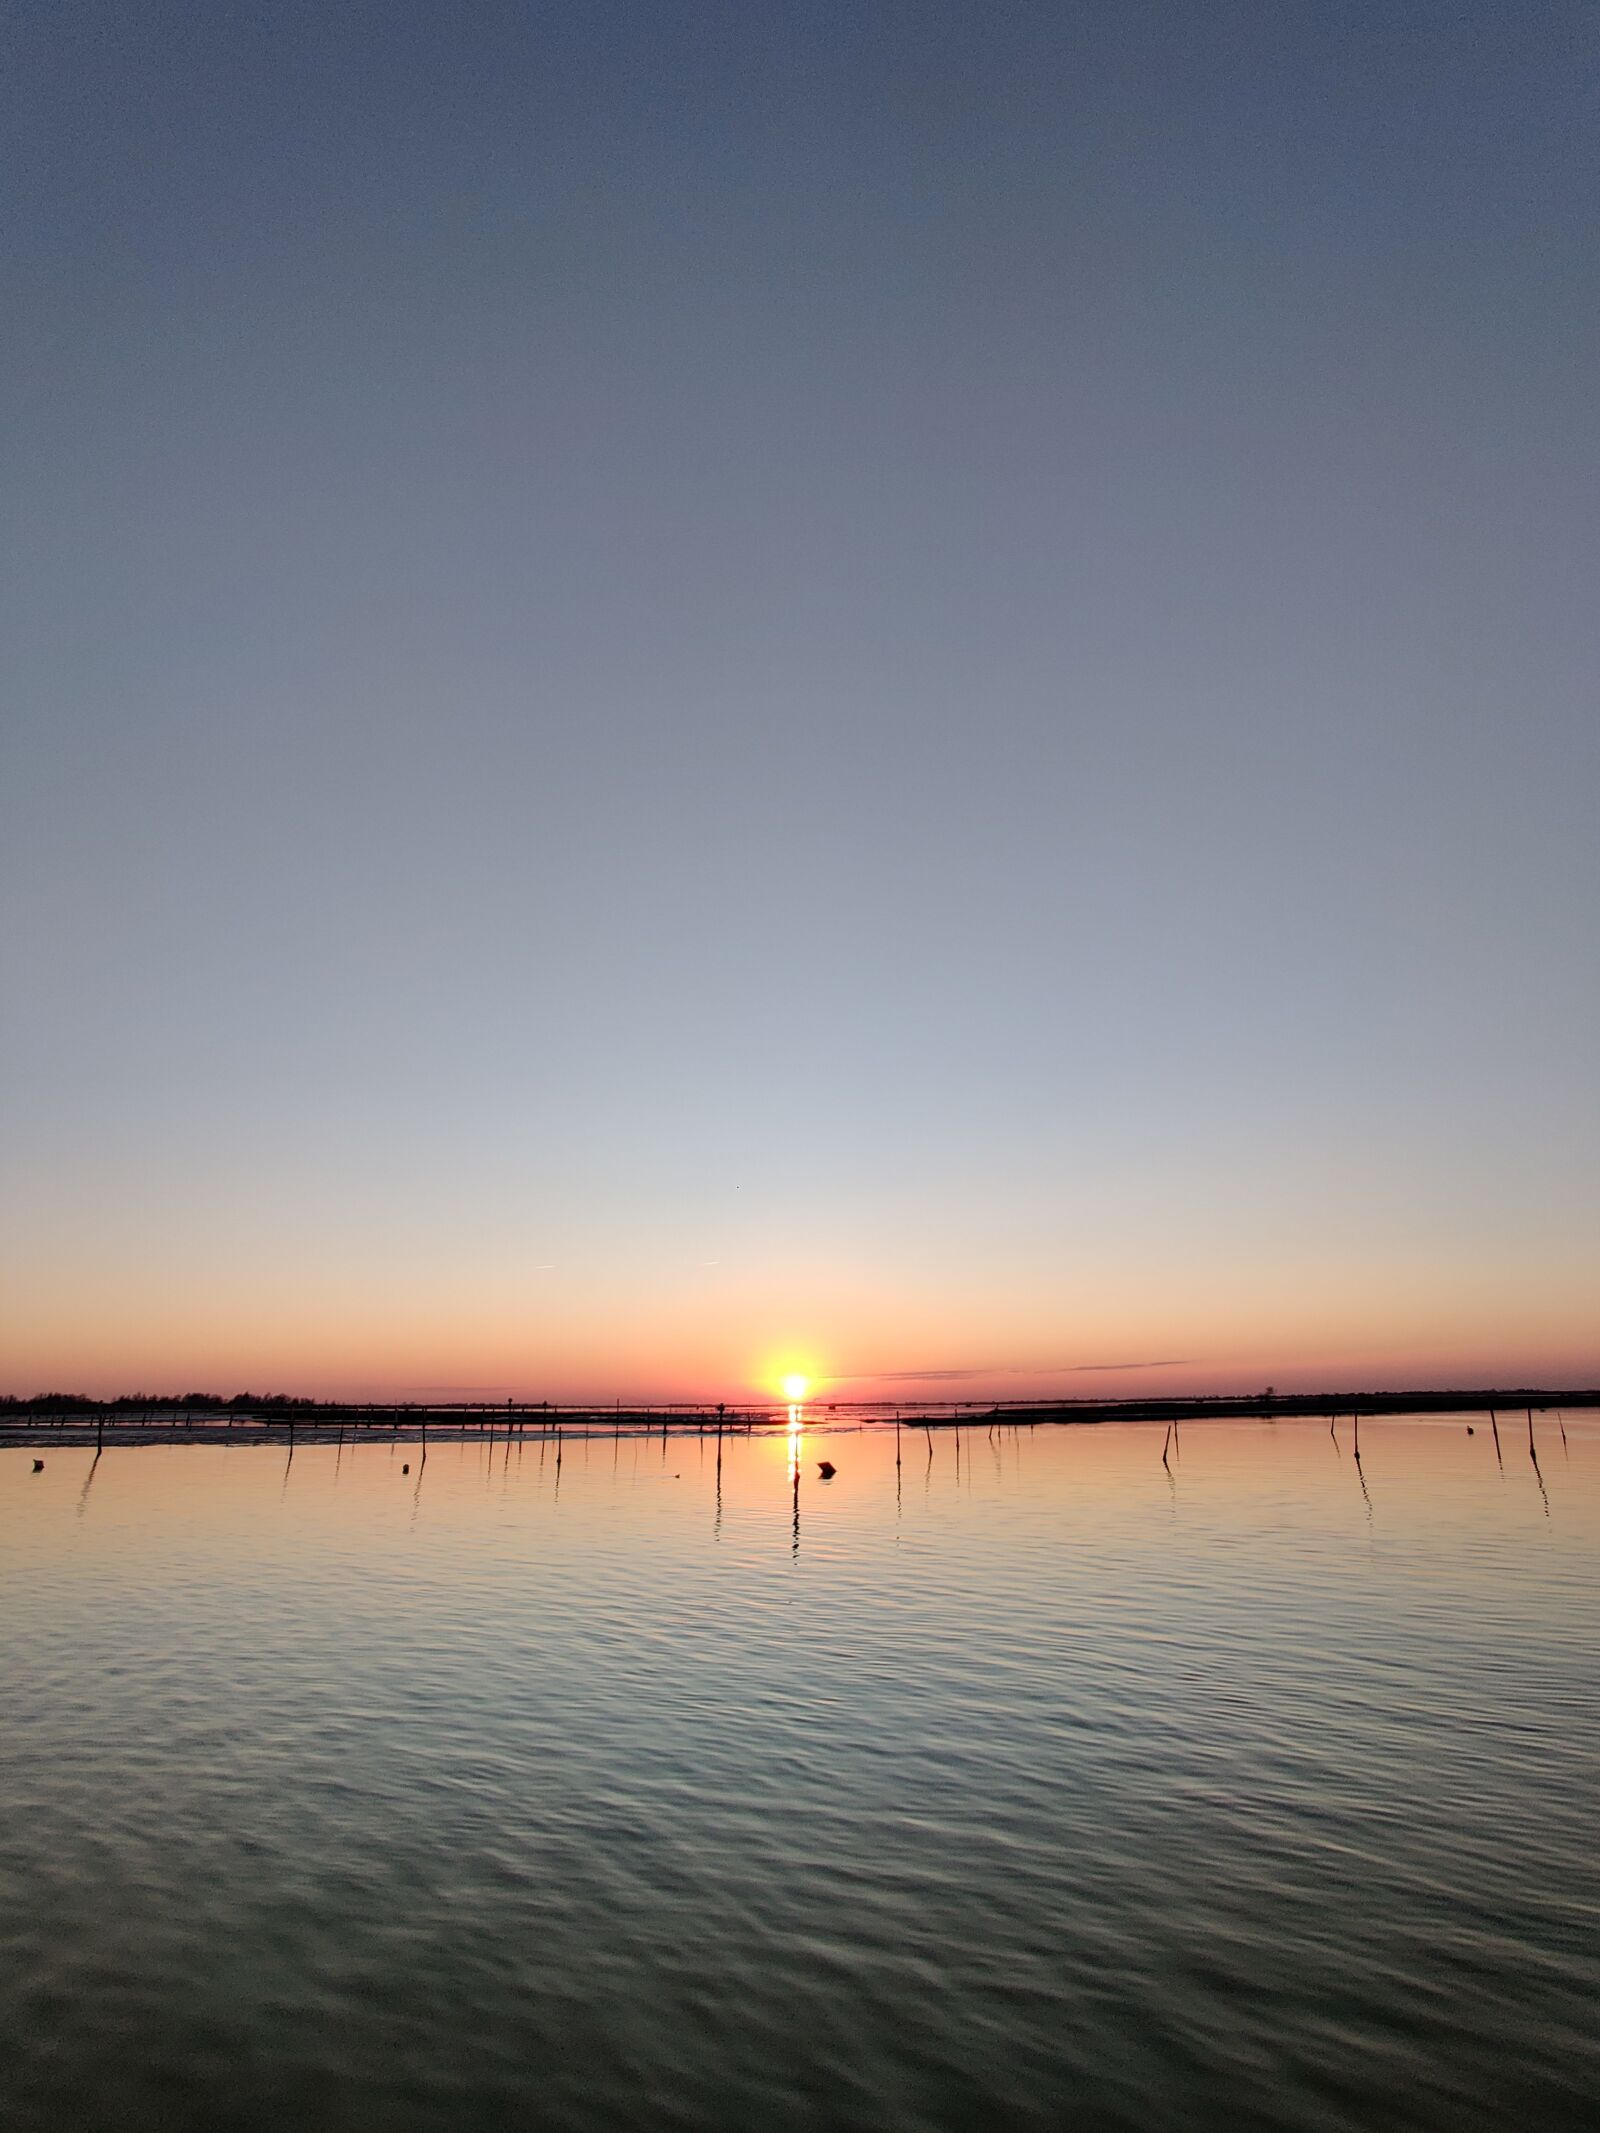 OnePlus HD1913 sample photo. Nature, sea, sunset photography